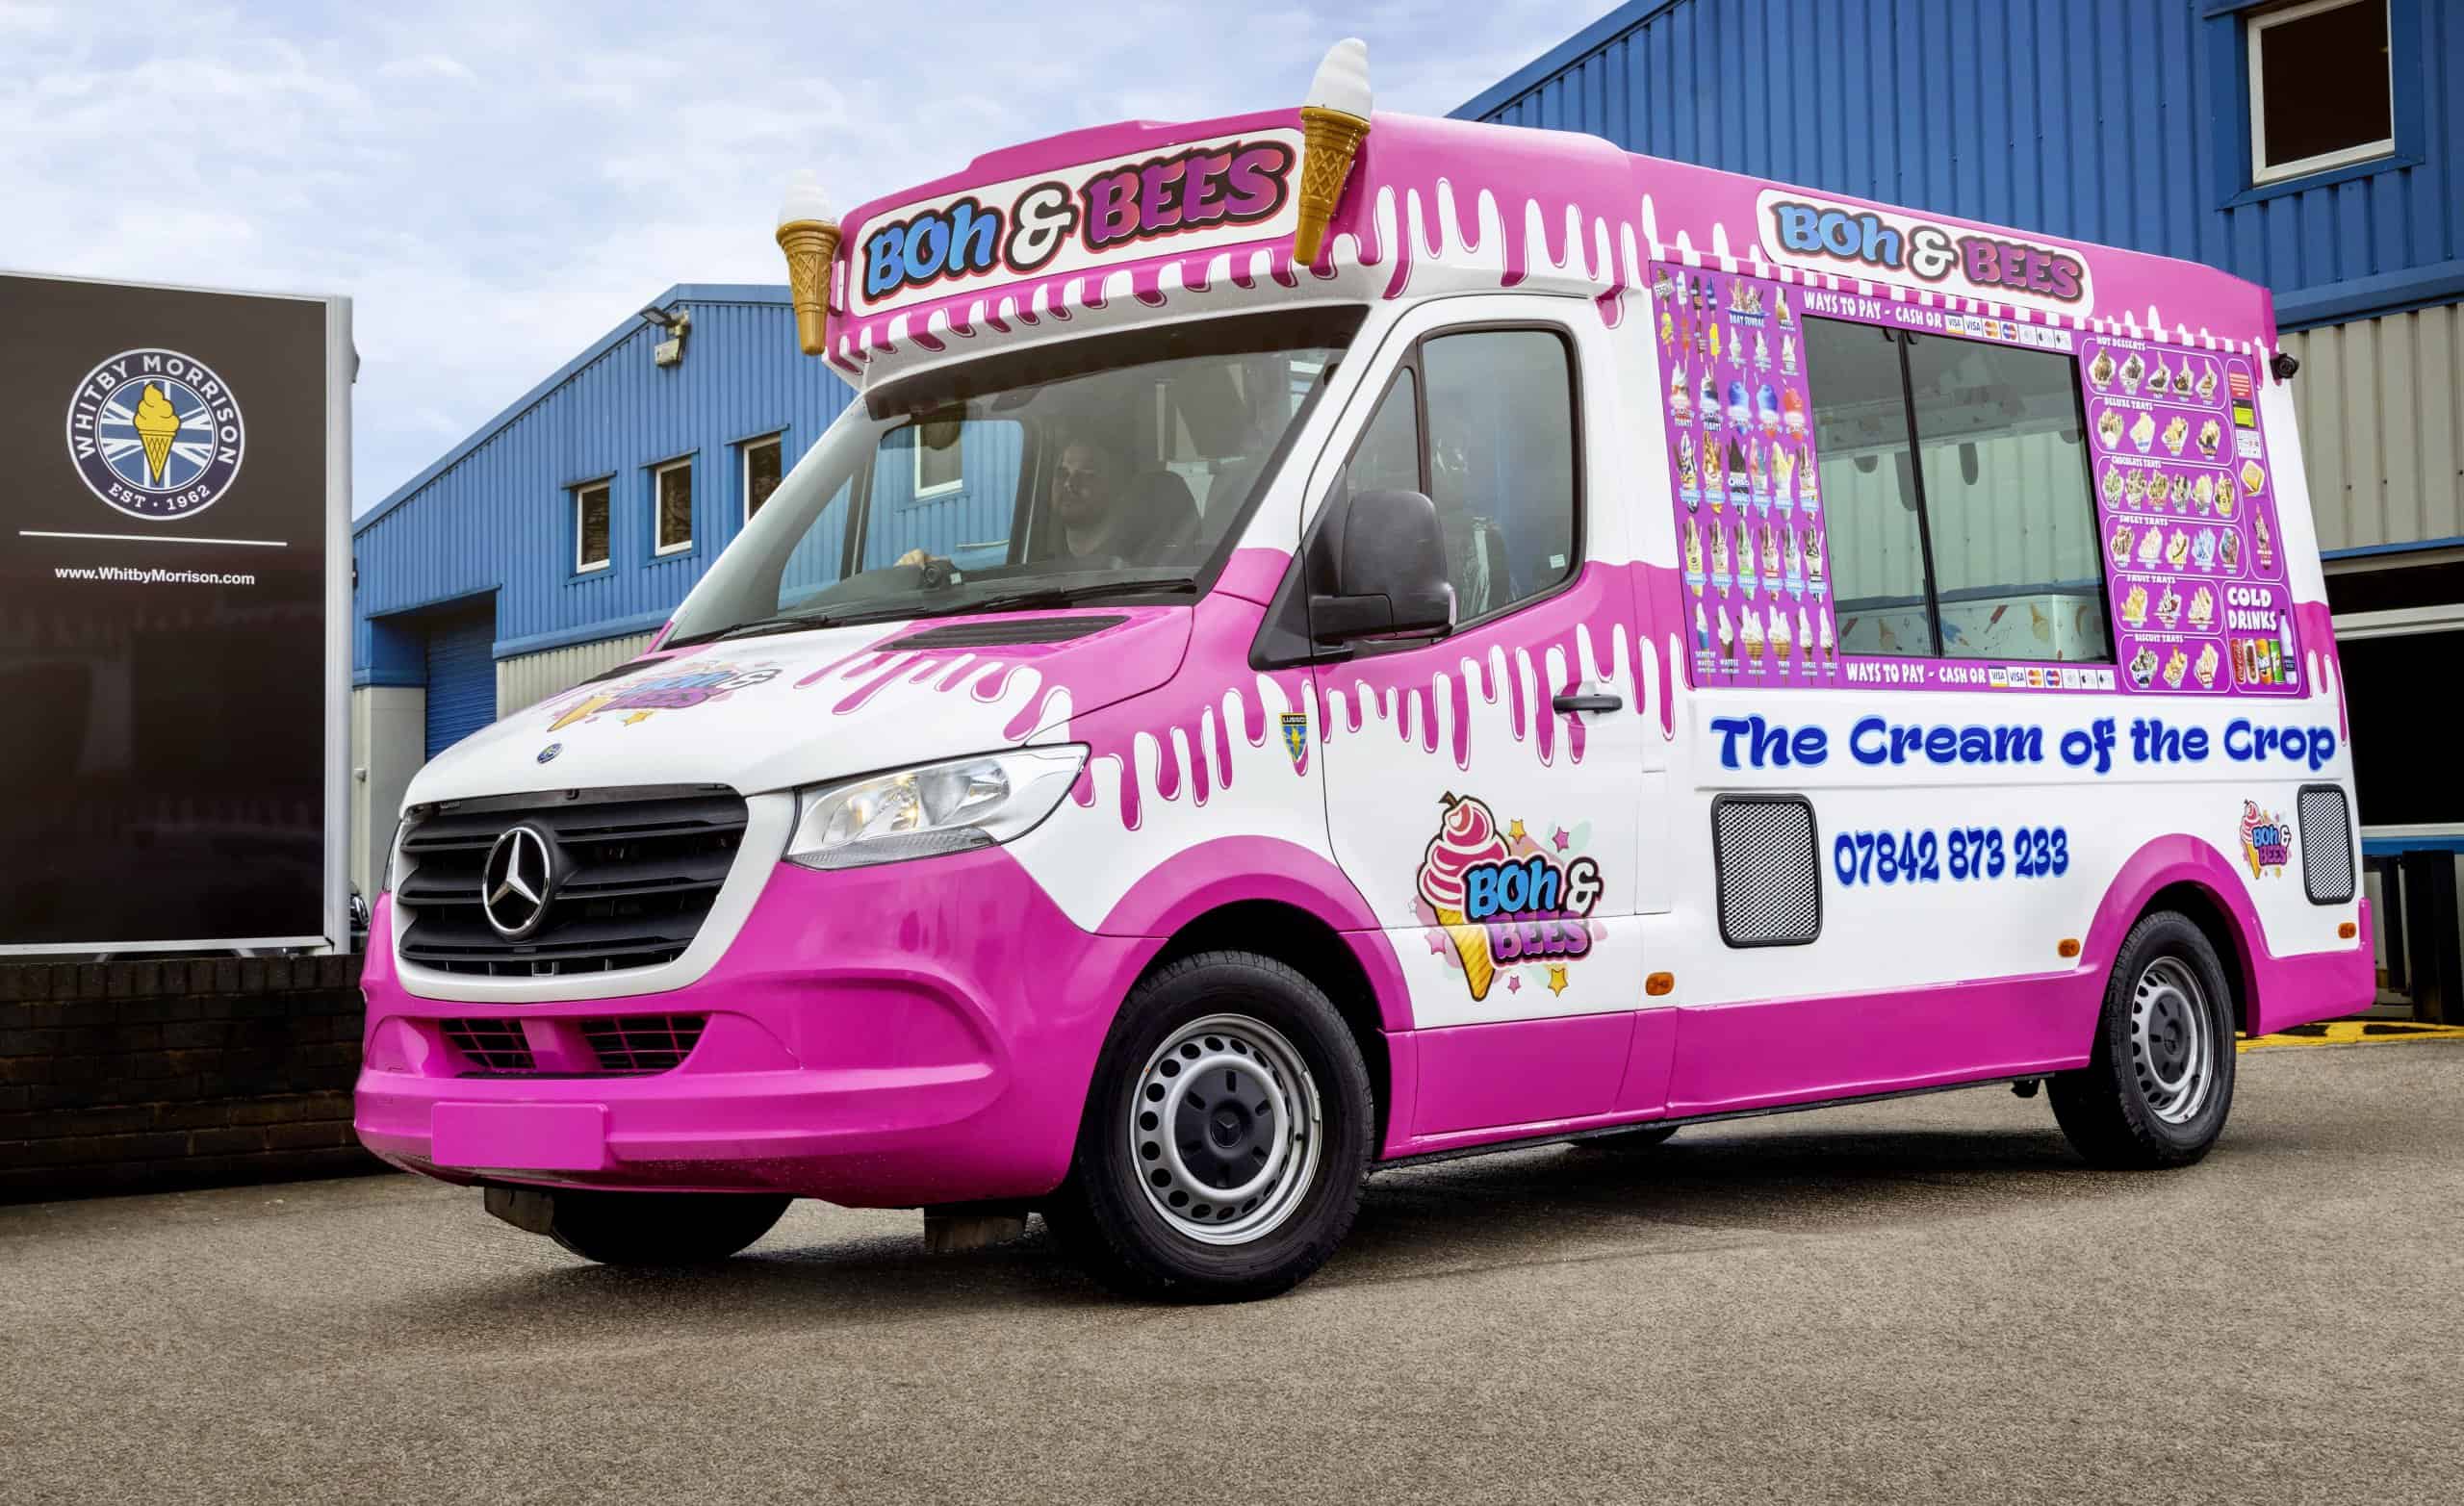 Neighborhood Ice Cream Trucks Popular Again In England